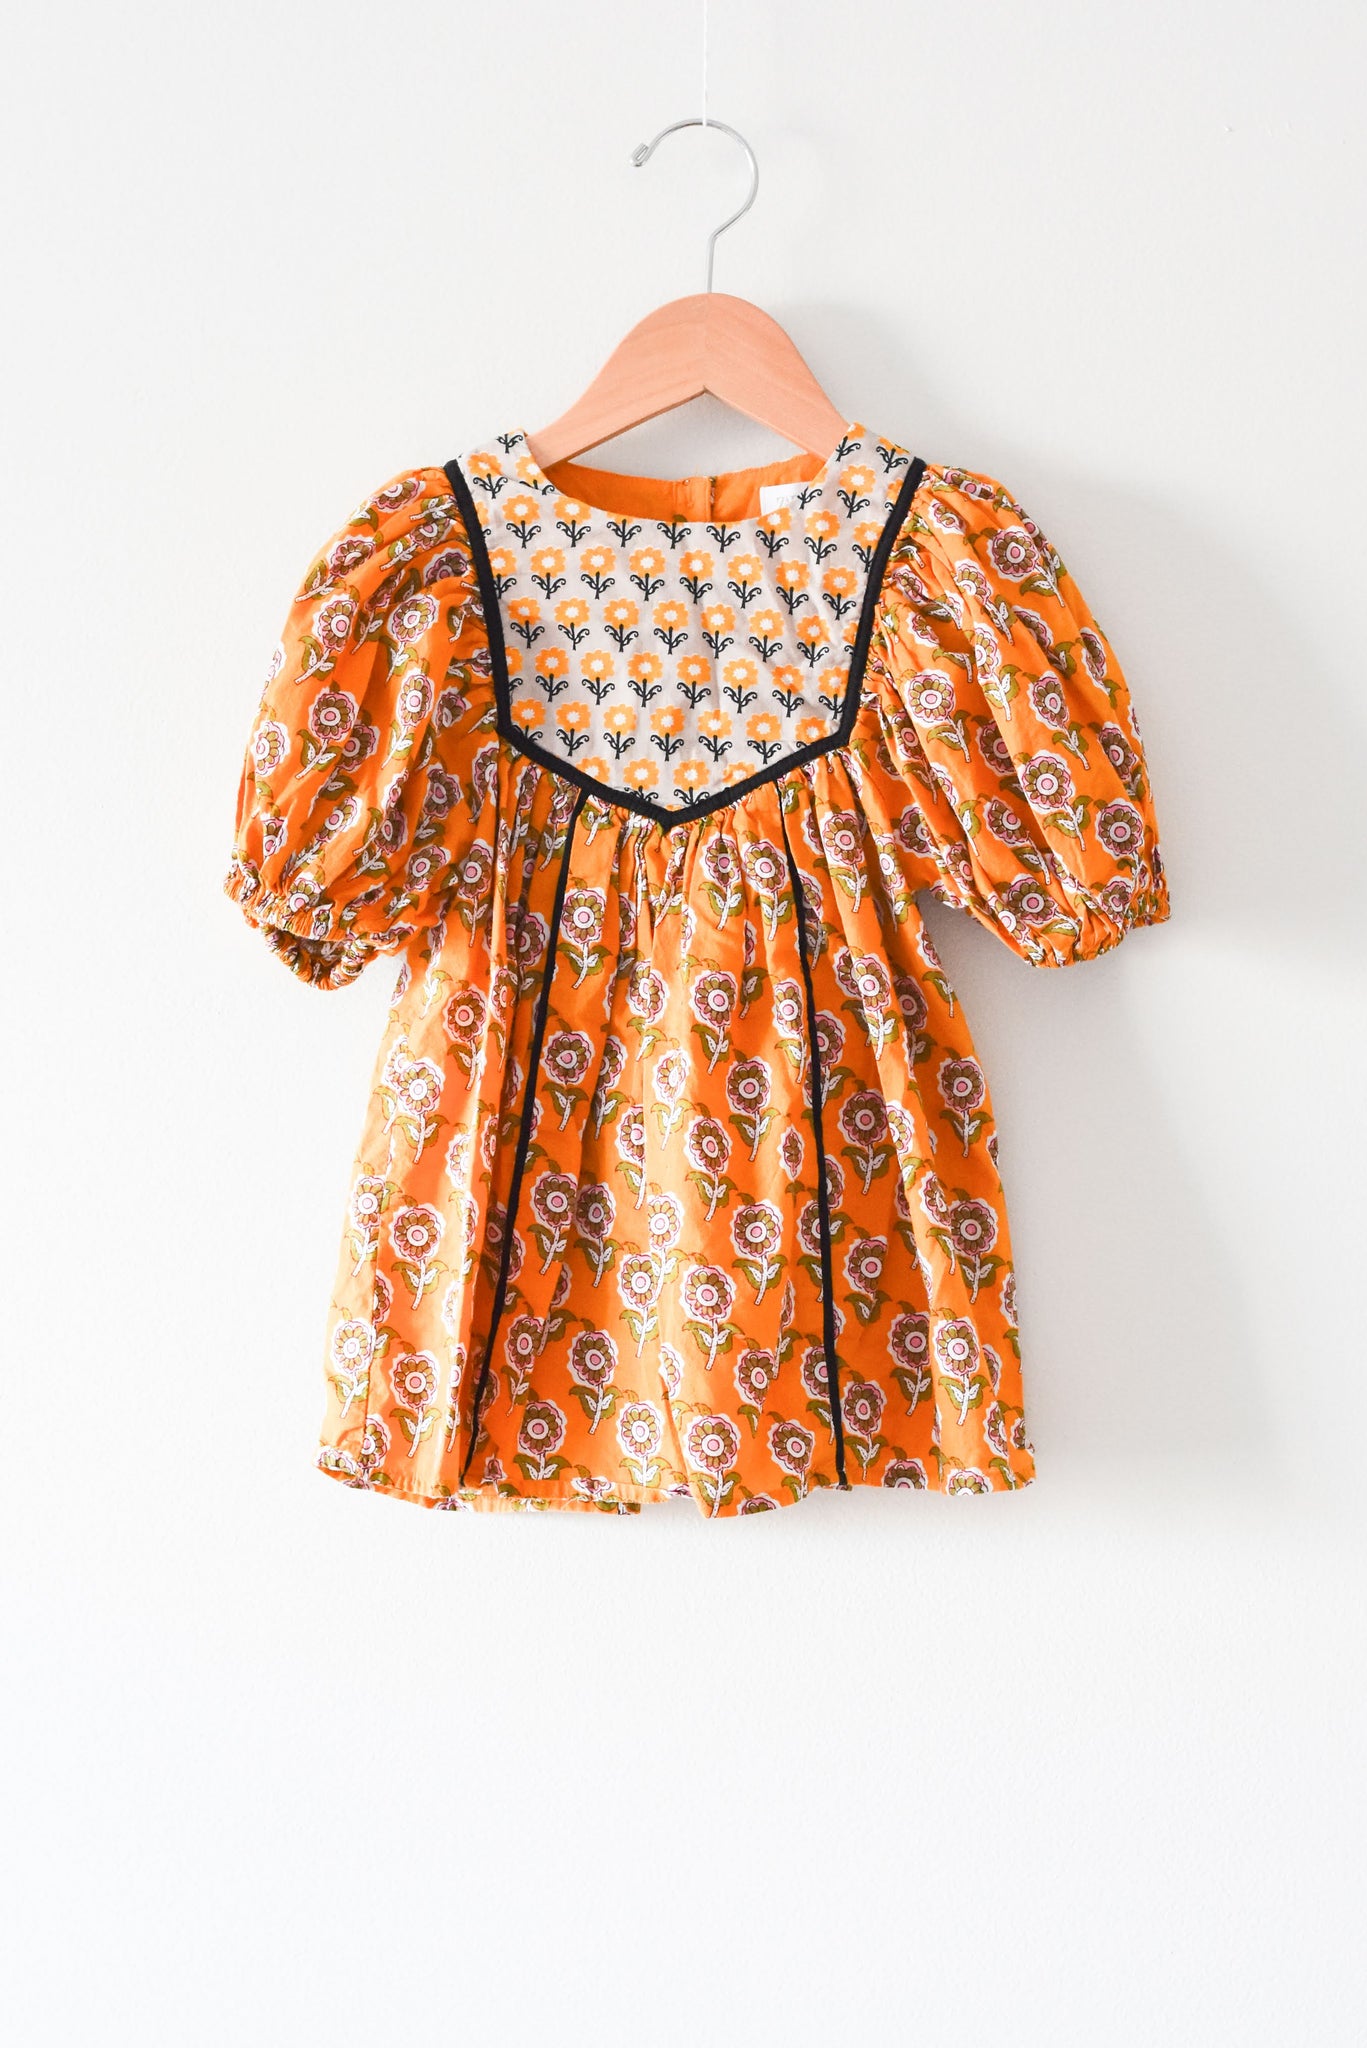 Zara Floral Boho Dress • 12-18 months